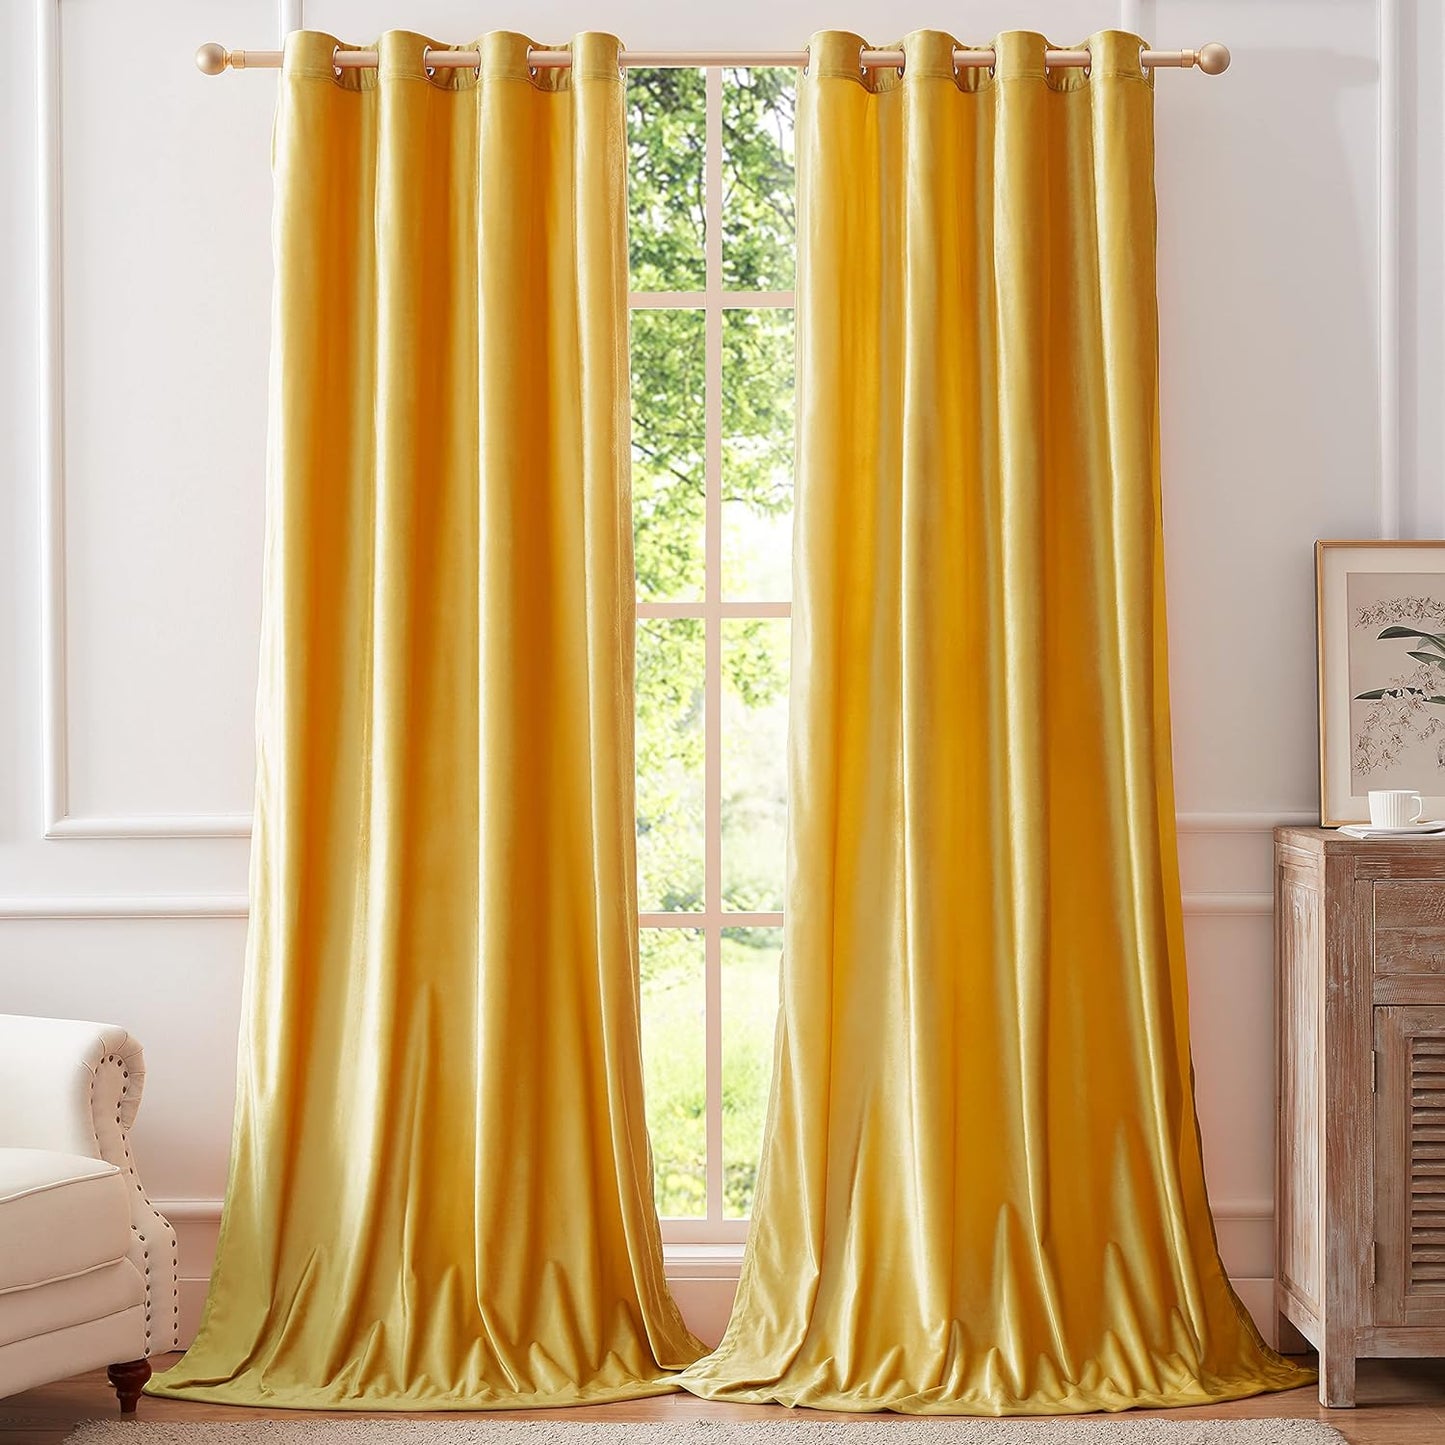 BULBUL Velvet Gold Curtains 84 Inch Length- Living Room Blackout Thermal Window Drapes Darkening Decor Grommet Curtains for Bedroom Set of 2 Panels  BULBUL Yellow 52"W X 90"L 